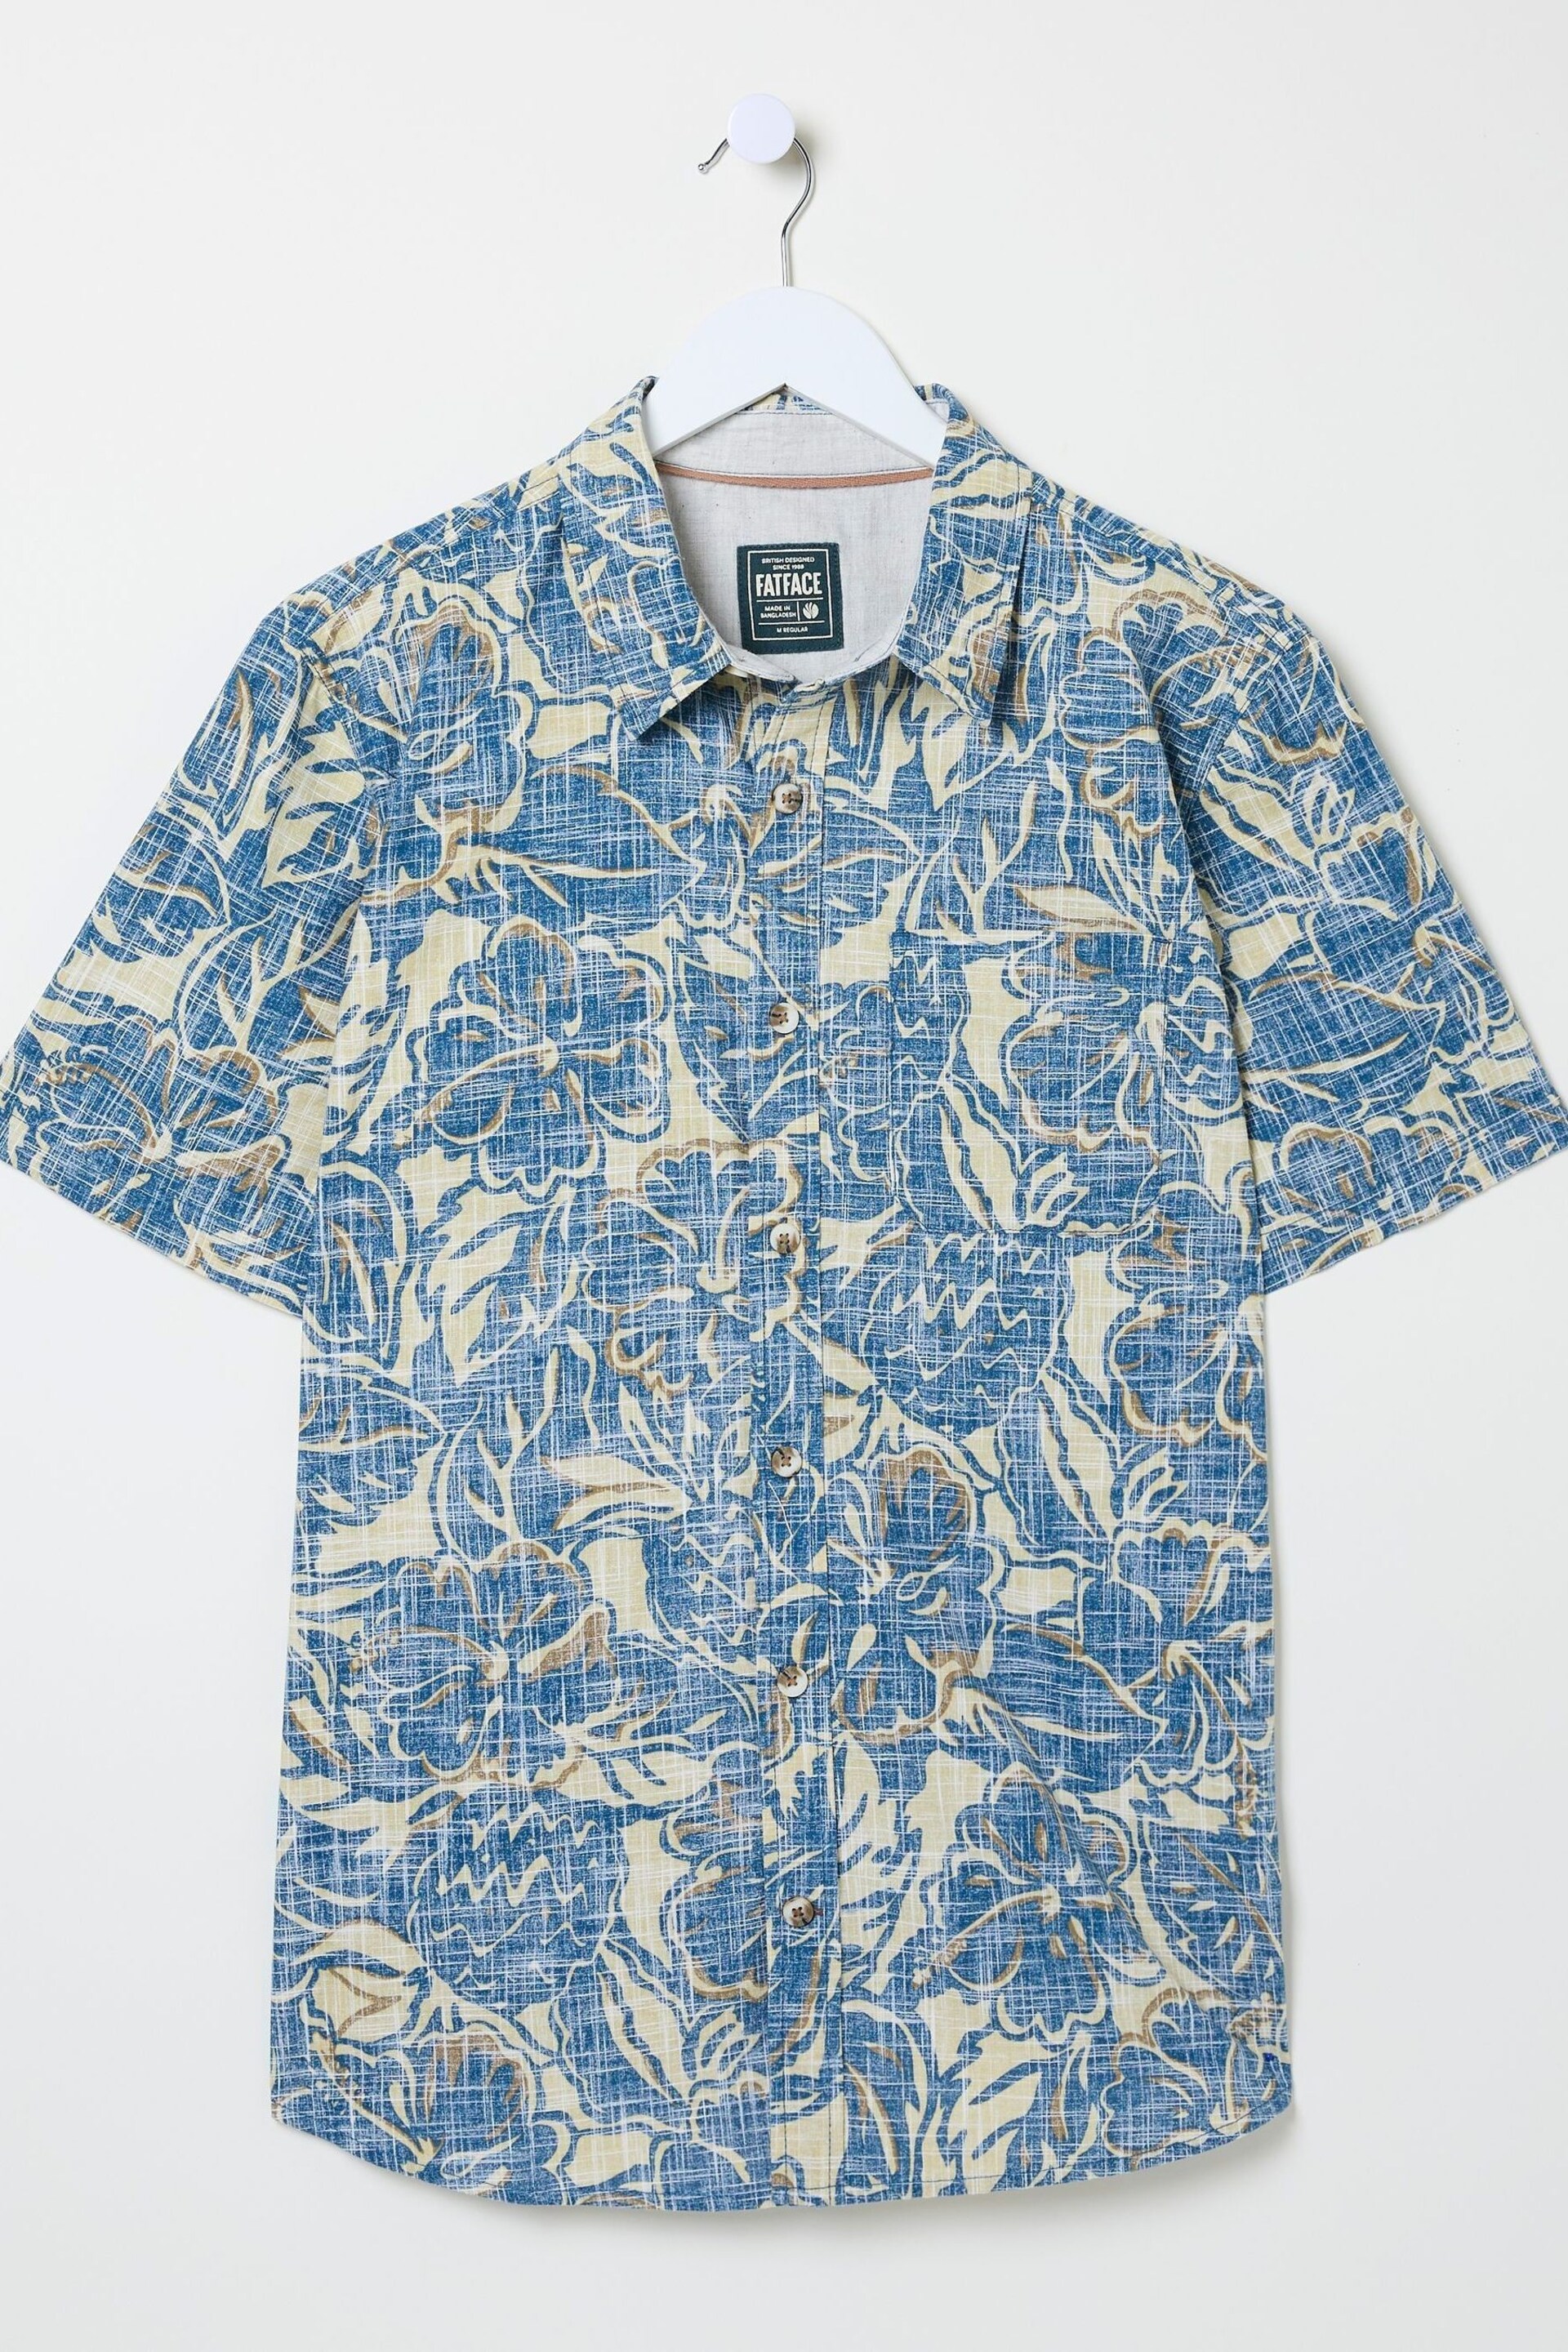 FatFace Blue Vintage Tropical Print Shirt - Image 1 of 5